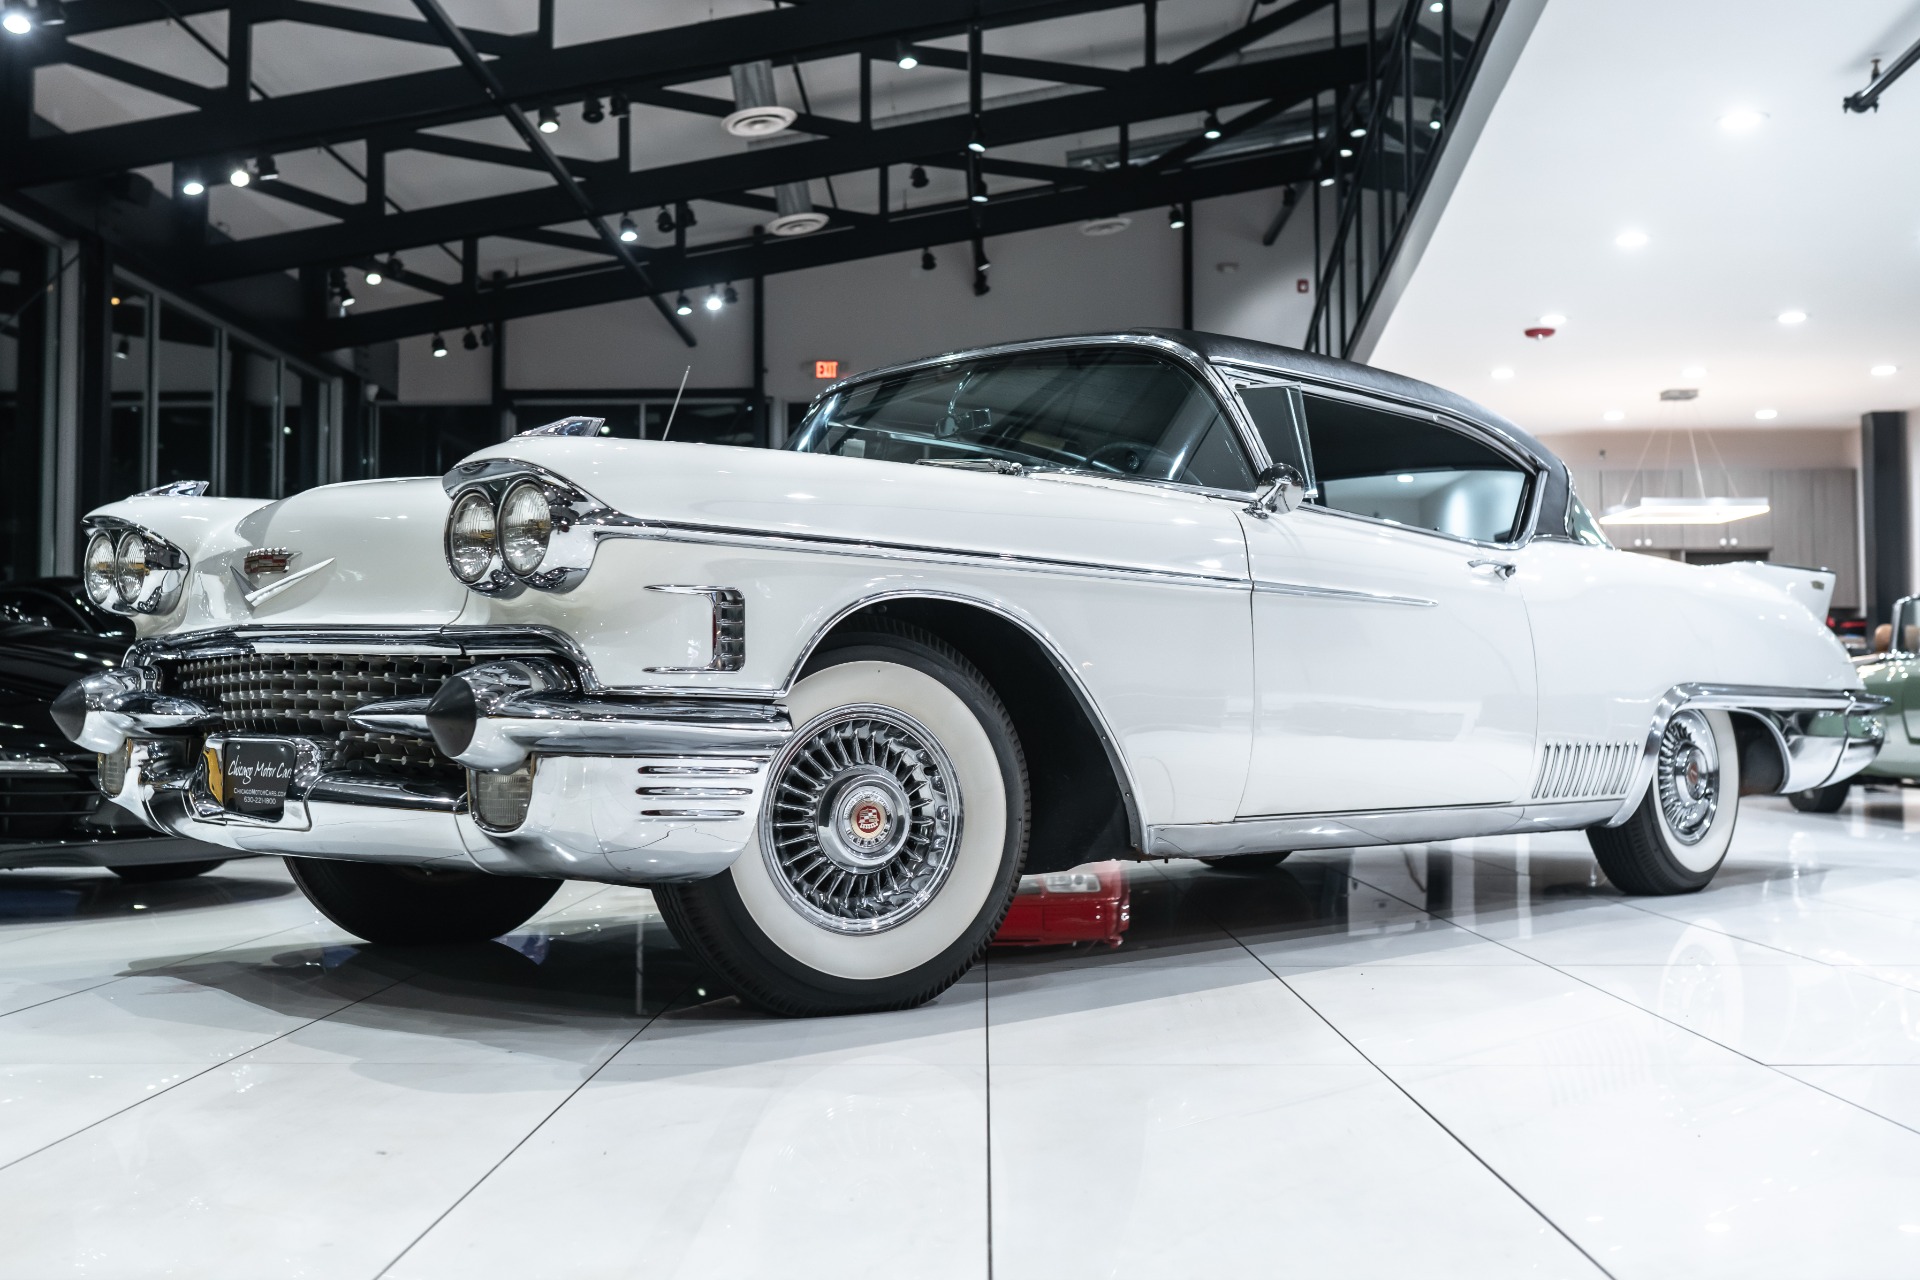 Used-1958-Cadillac-Eldorado-Seville-2-Door-Hardtop-1-of-855-Built-Matching---Rare-Factory-AC-Gorgeous-Color